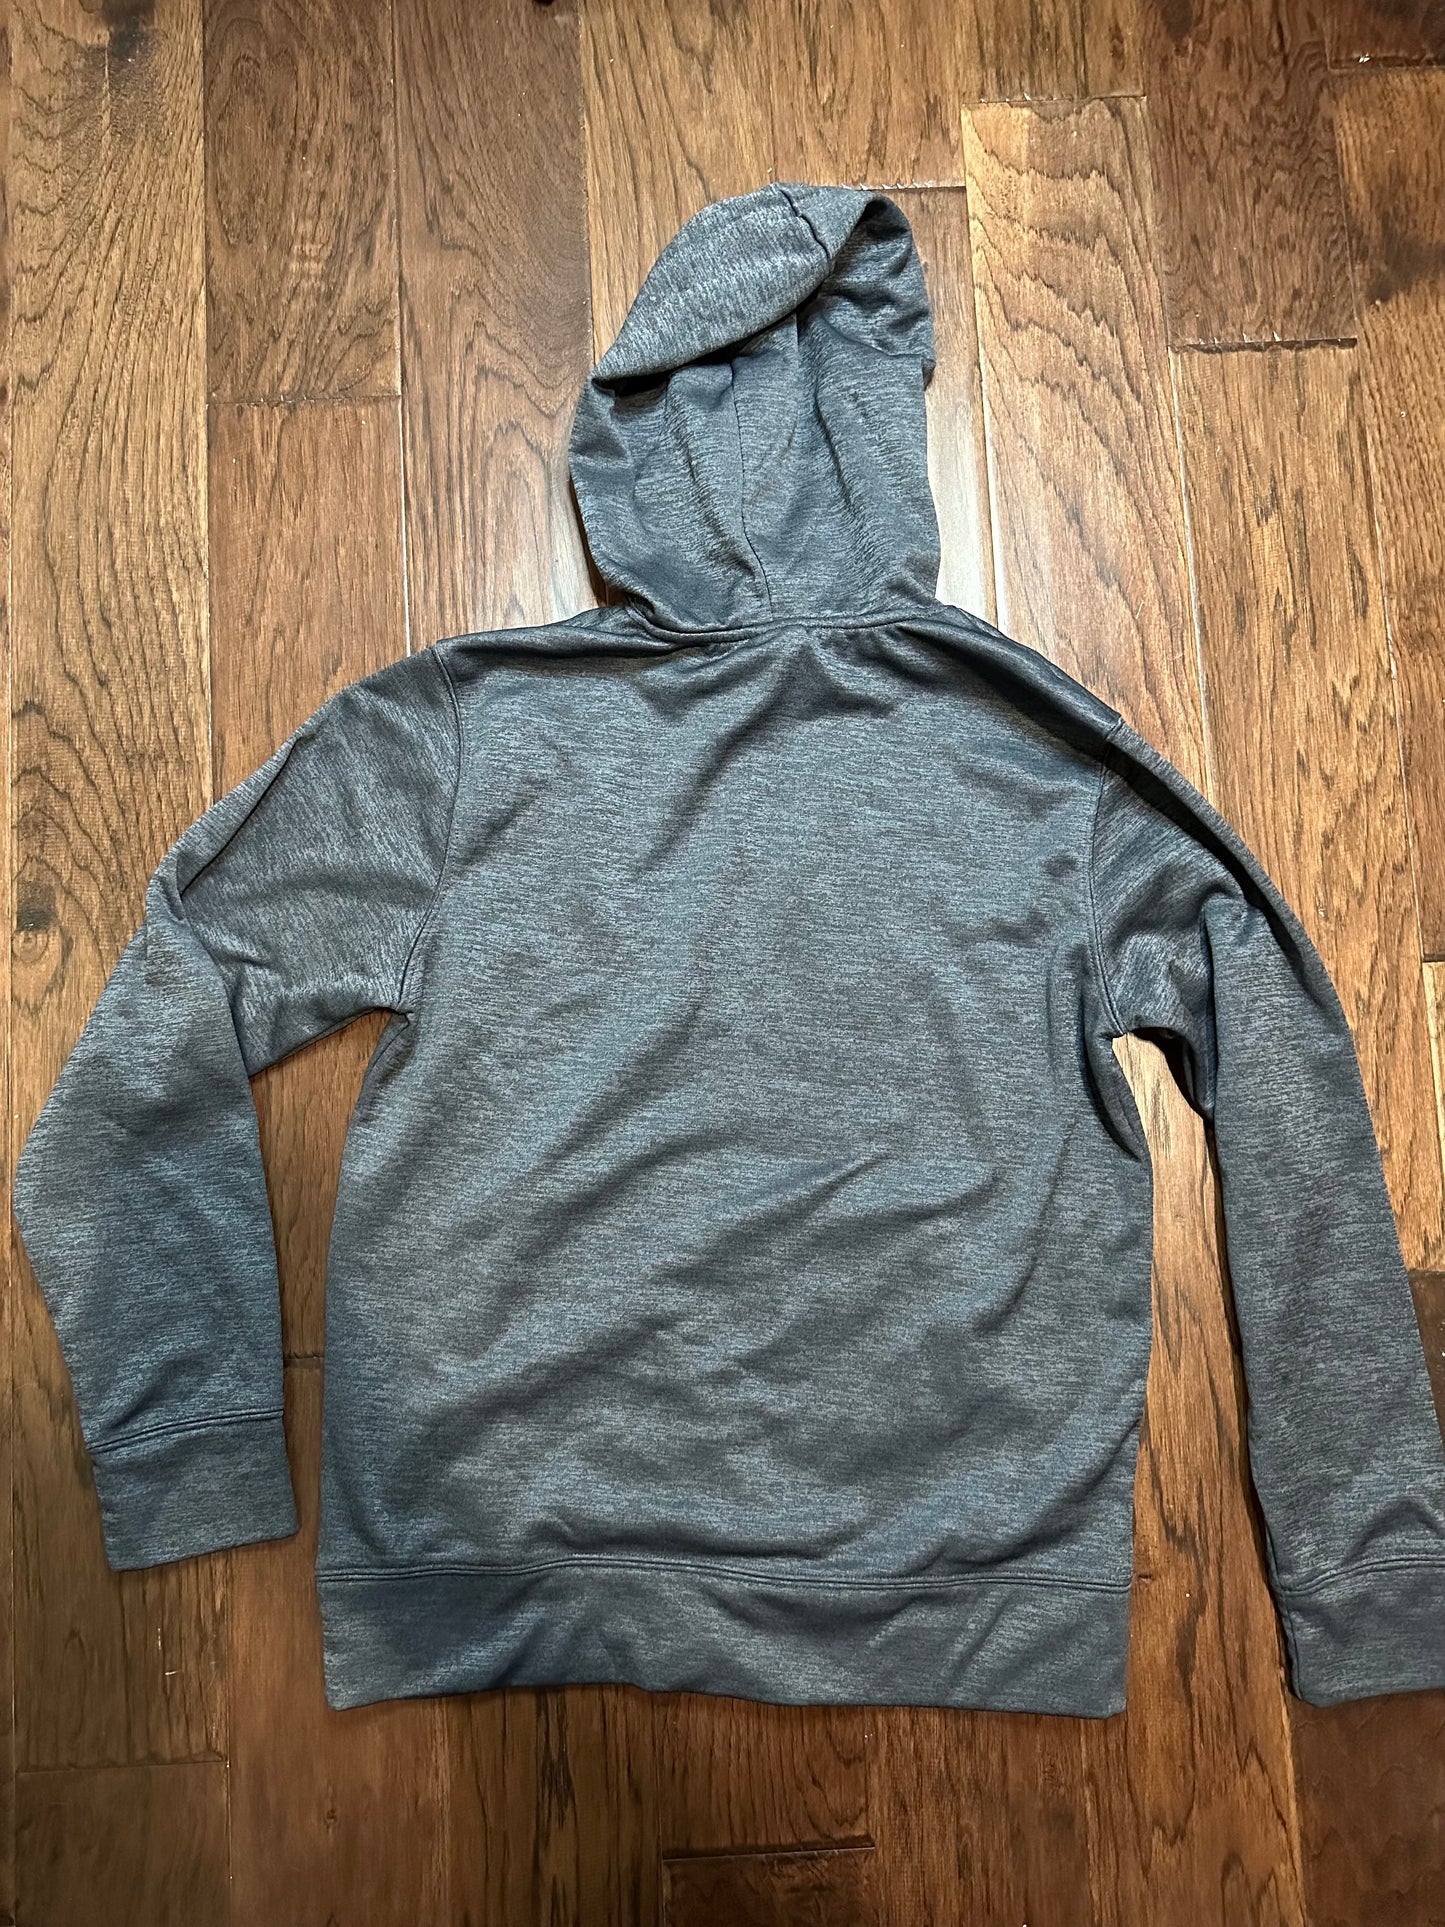 Reebok Sweater Gray White Outdoors Athletic Hoodie Sweatshirt - Medium